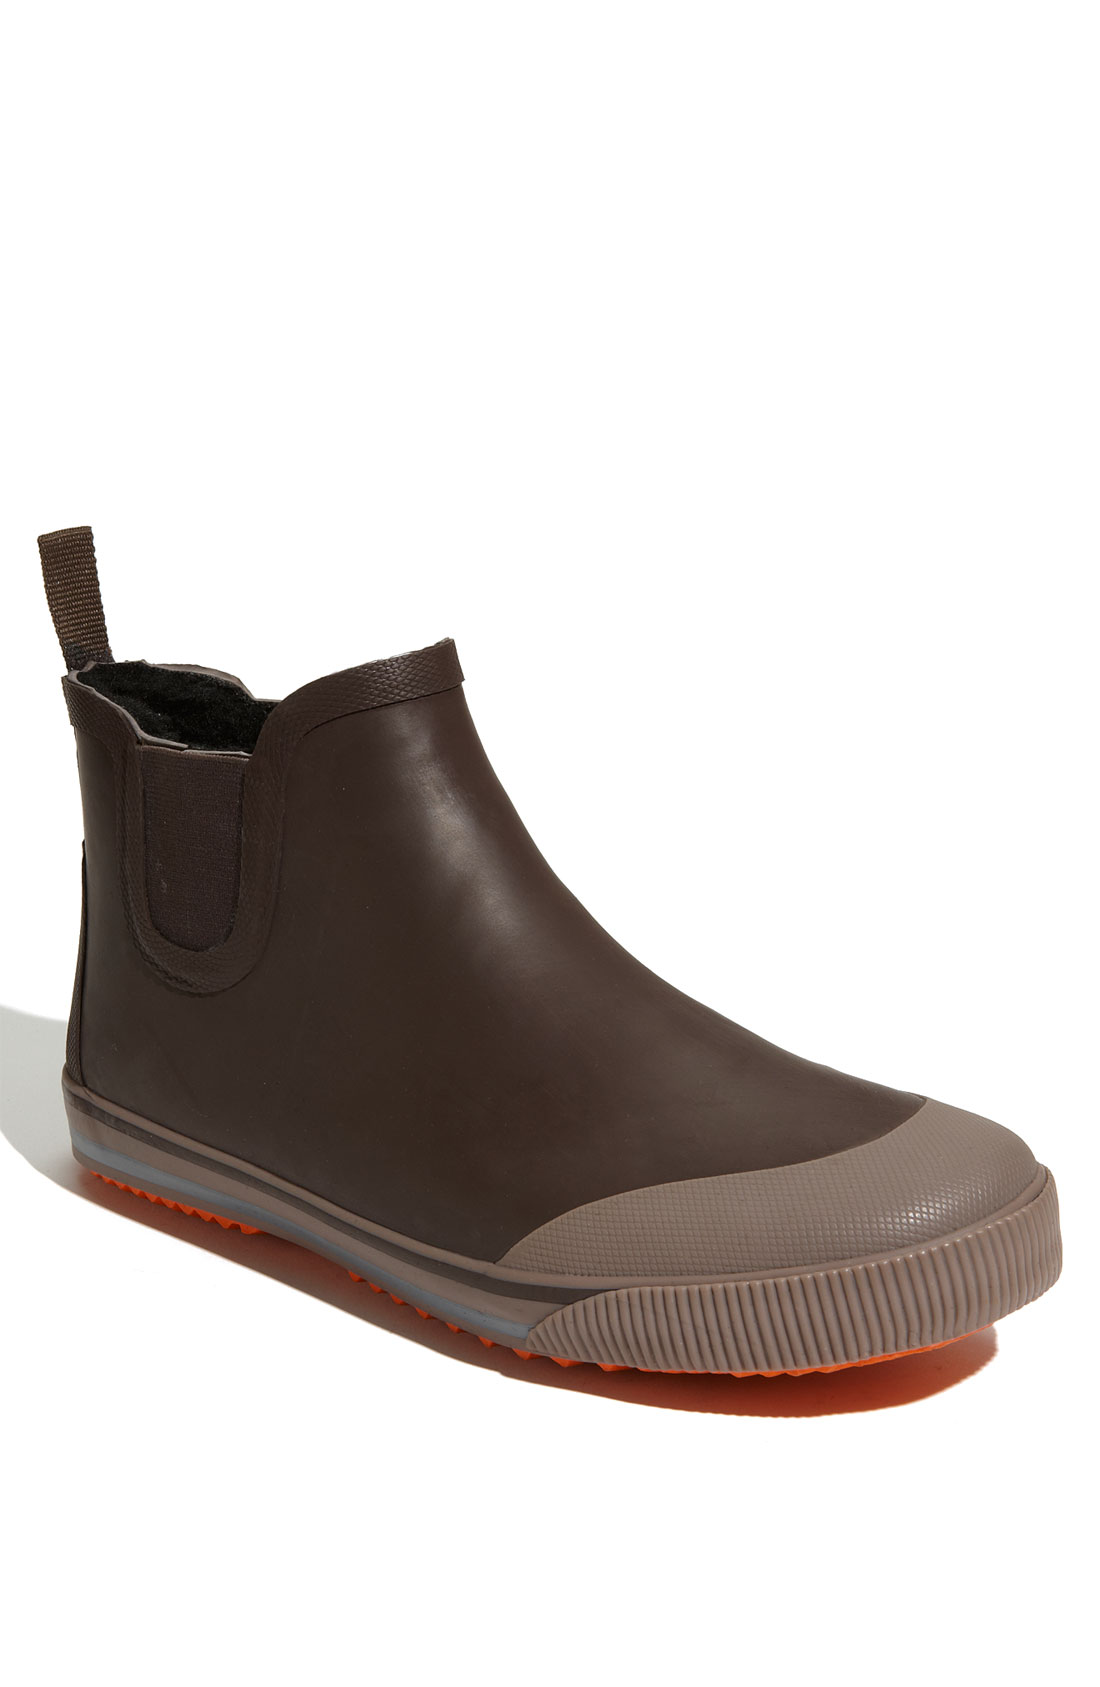 Tretorn Strala Rain Boot in Brown for Men (brown/ orange) | Lyst